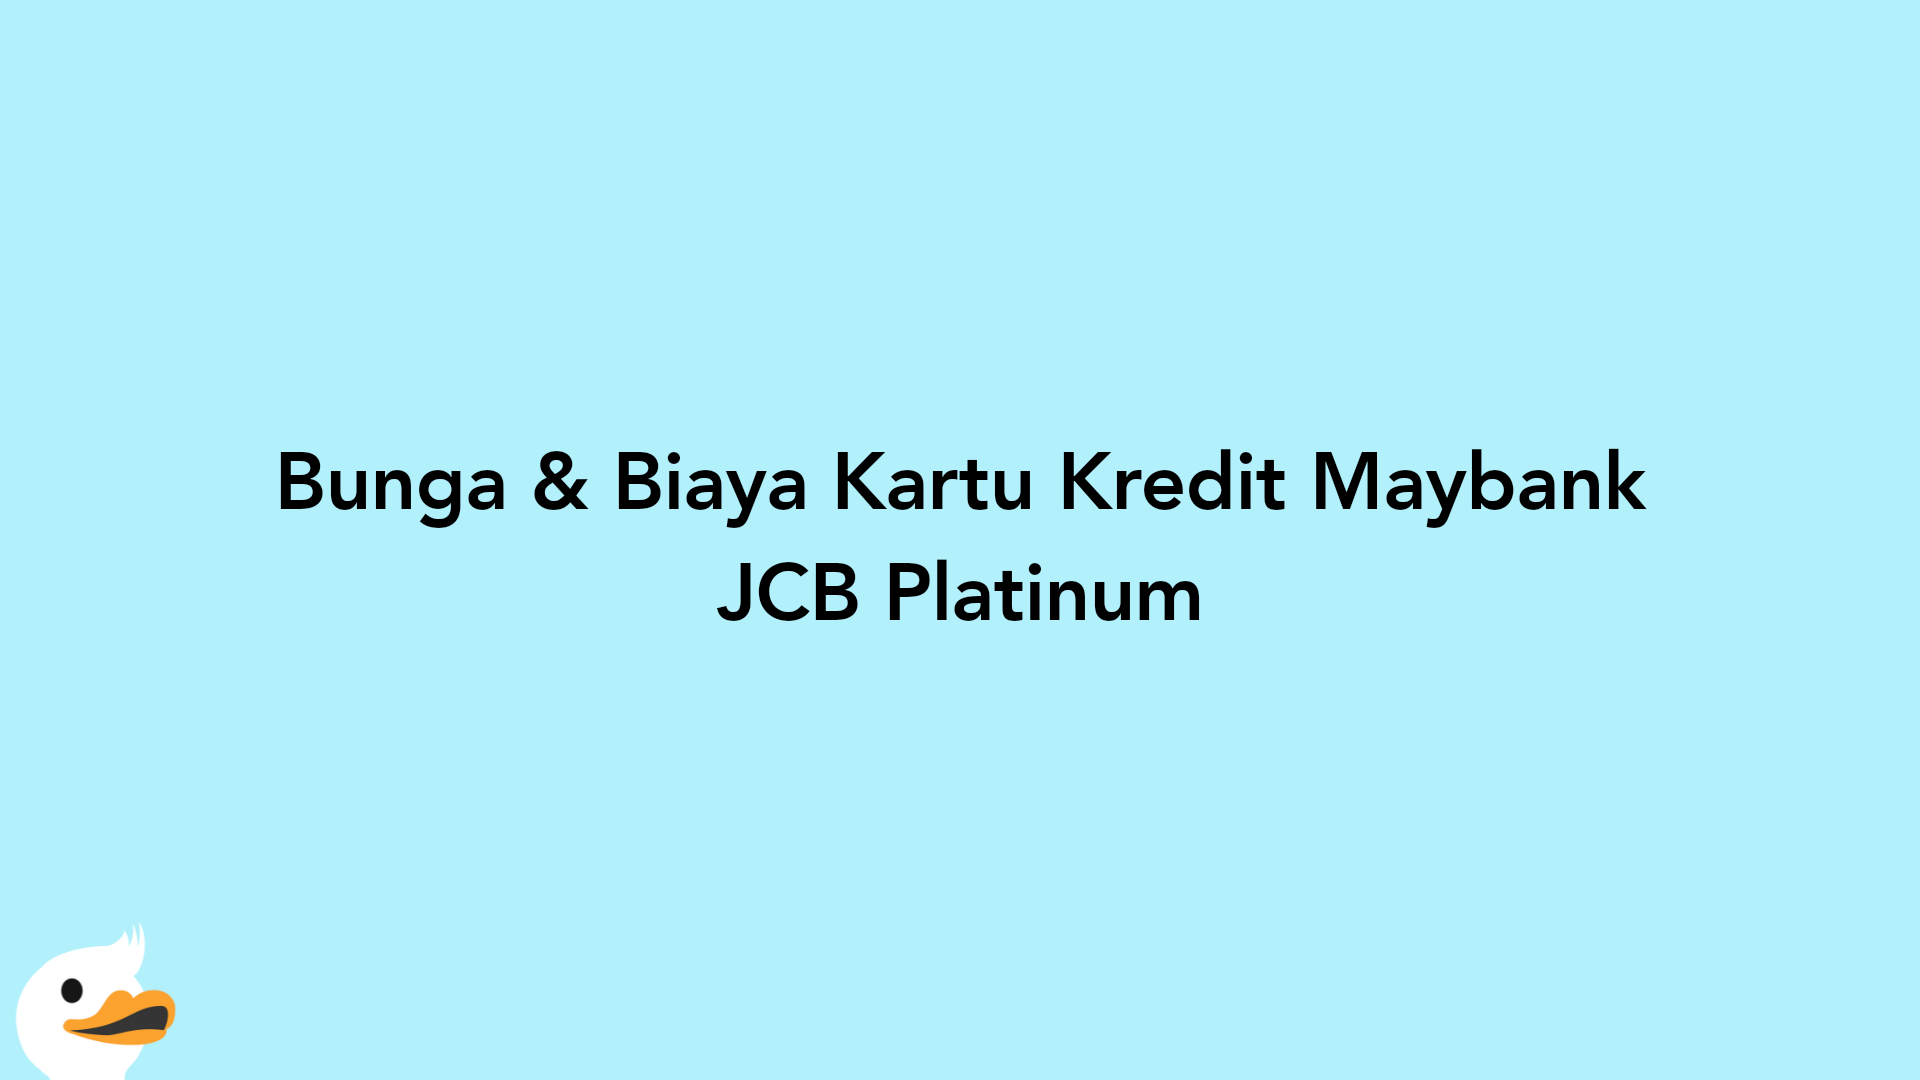 Bunga & Biaya Kartu Kredit Maybank JCB Platinum